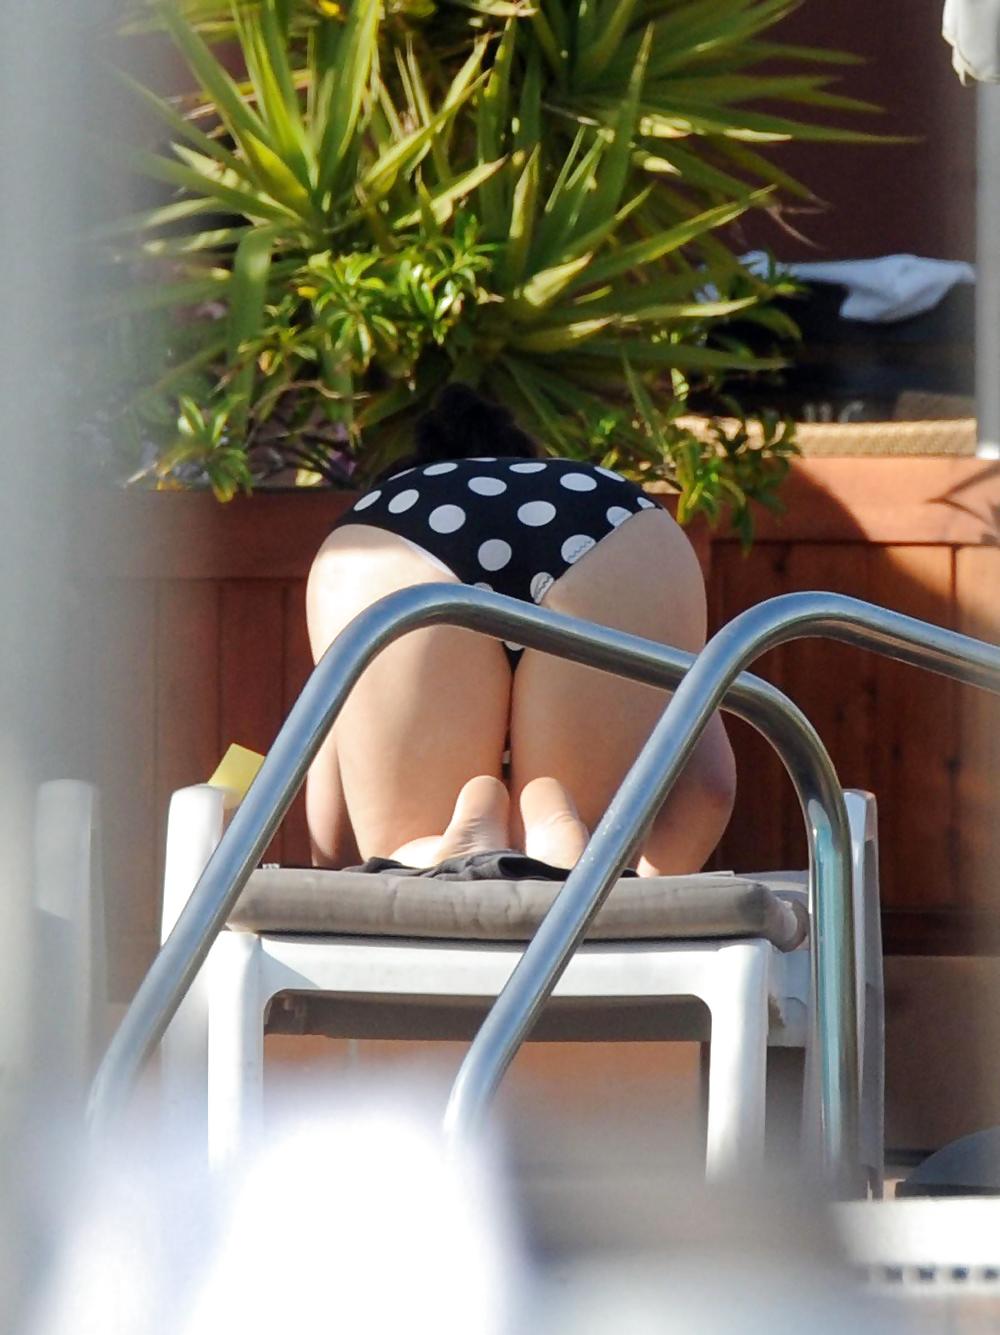 Gemma Arterton Pool in Polka Dot Bikini showing of her Butt #4076827